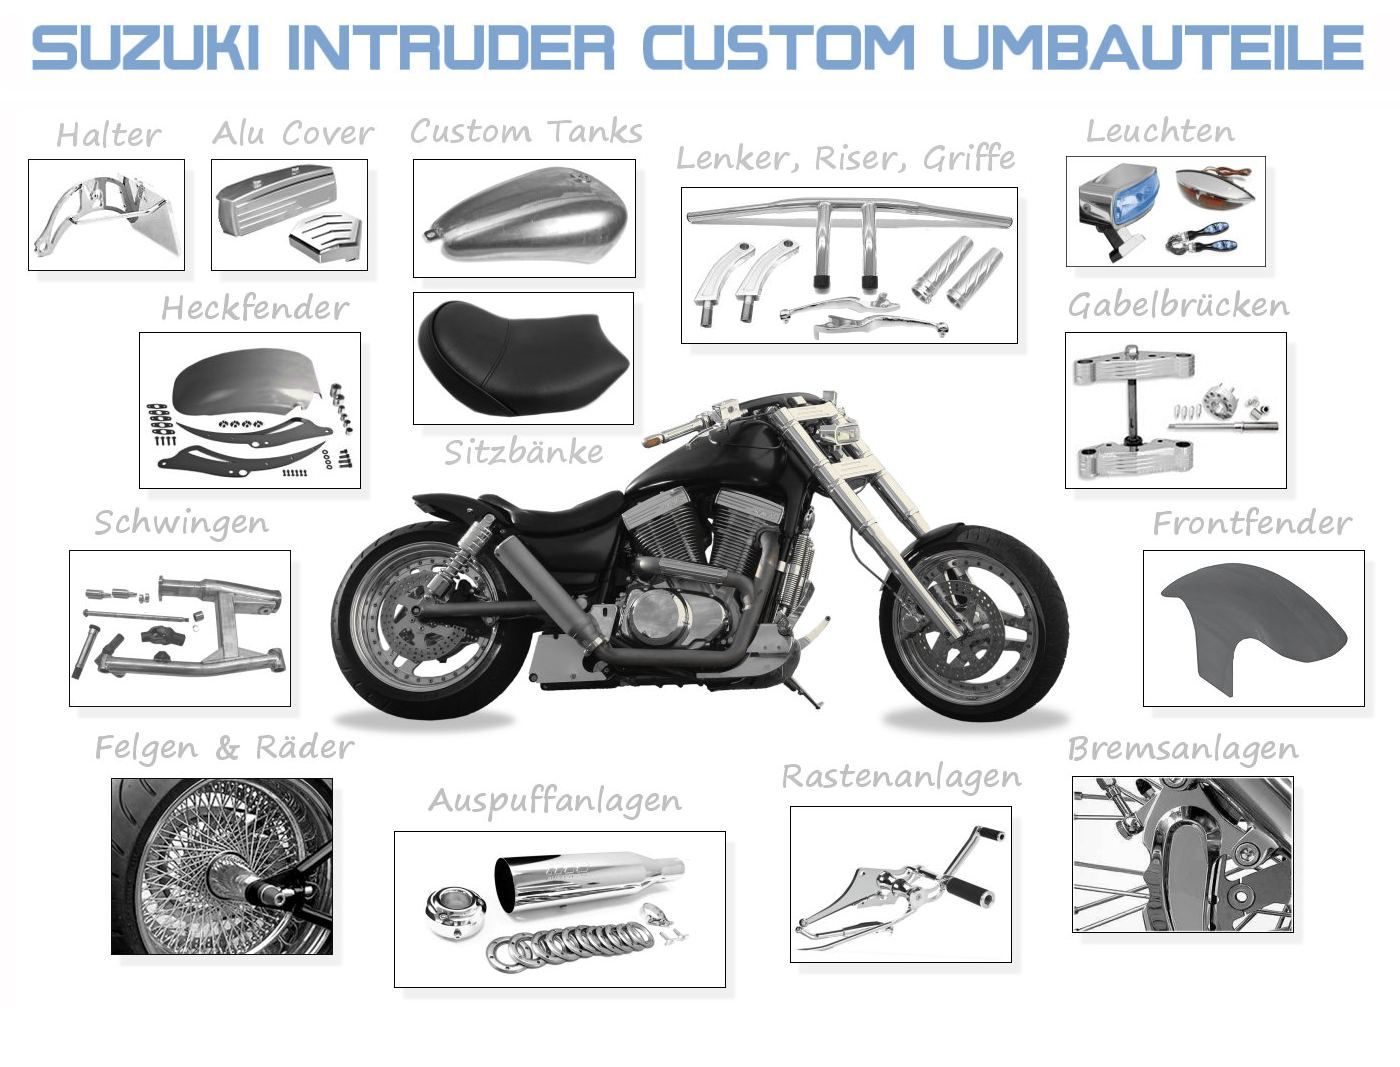 Suzuki Intruder Custom Umbauteile